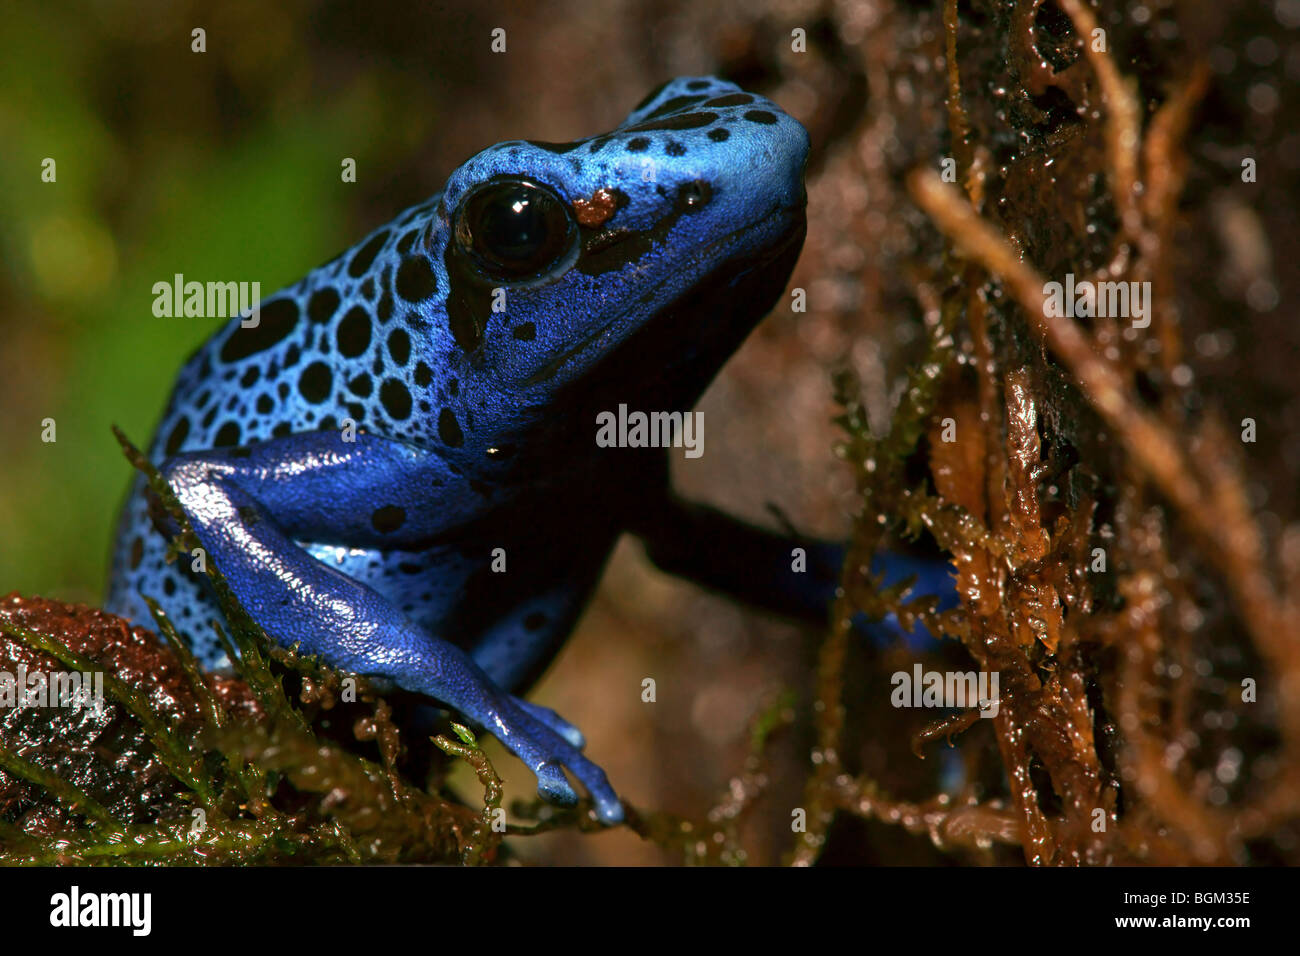 Blue Poison Dart Frog (Dendrobates tinctorius azureus) en cautiverio Foto de stock